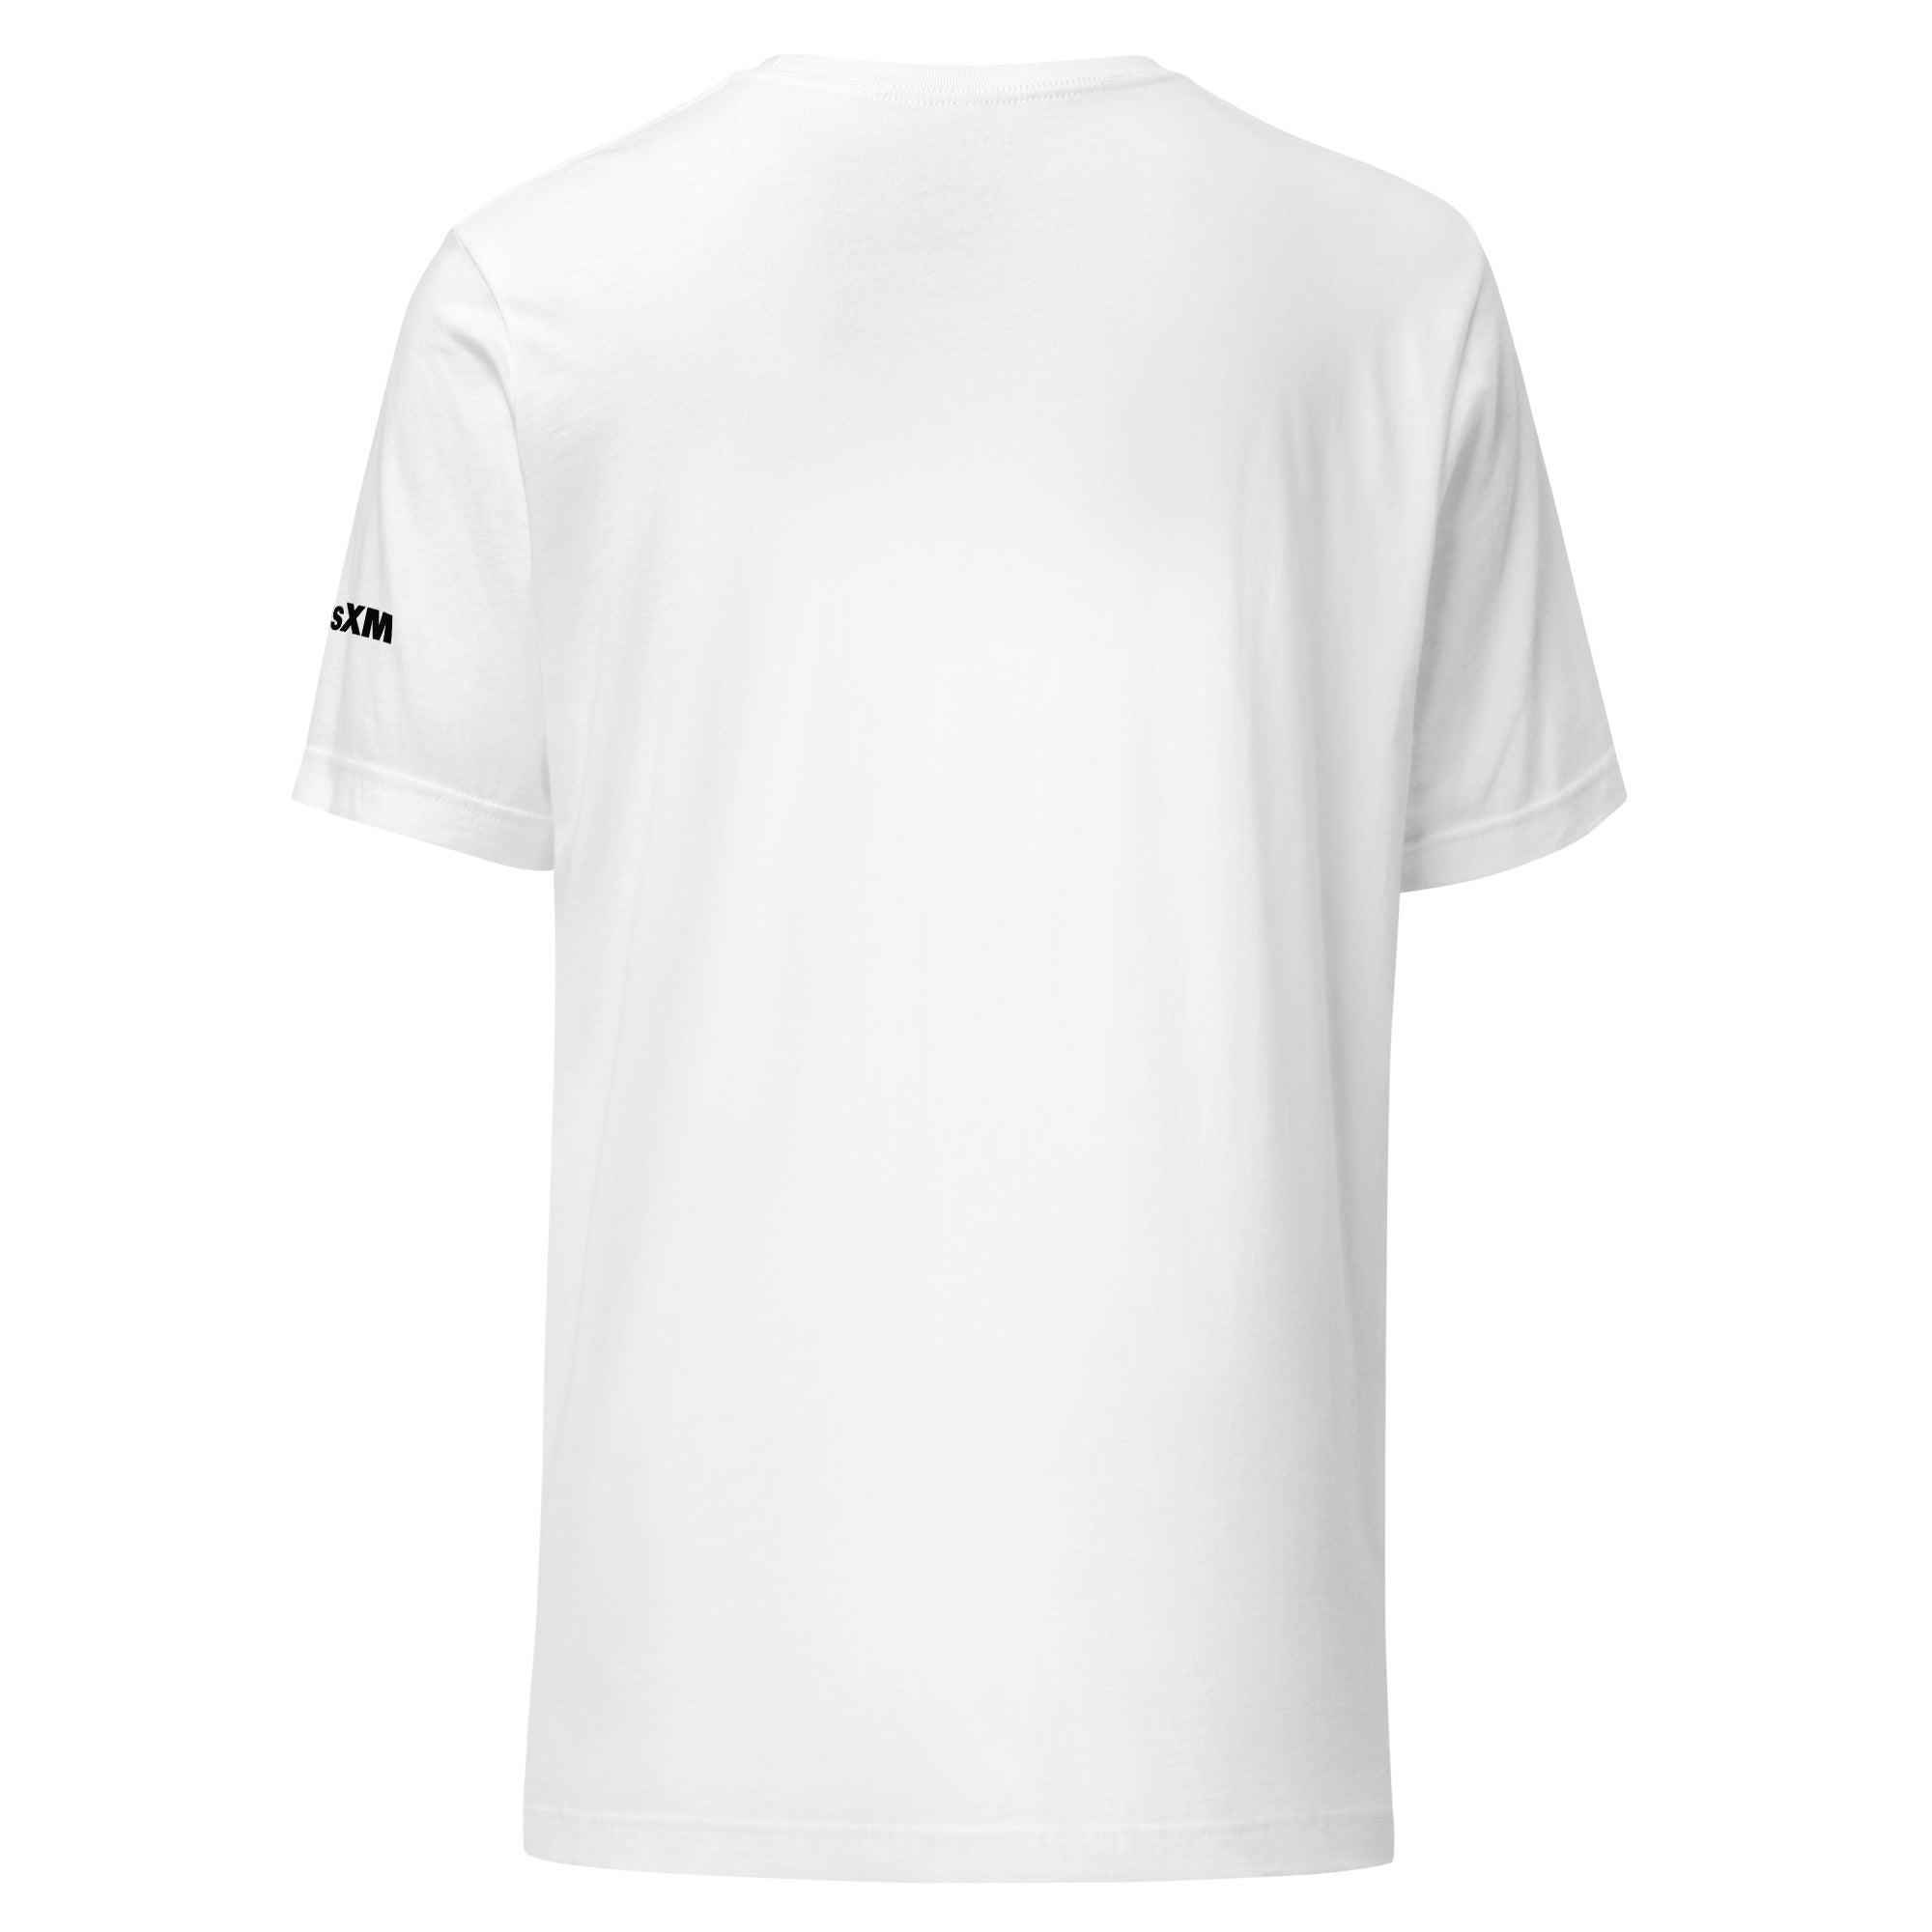 Symphony Hall: T-shirt (White)